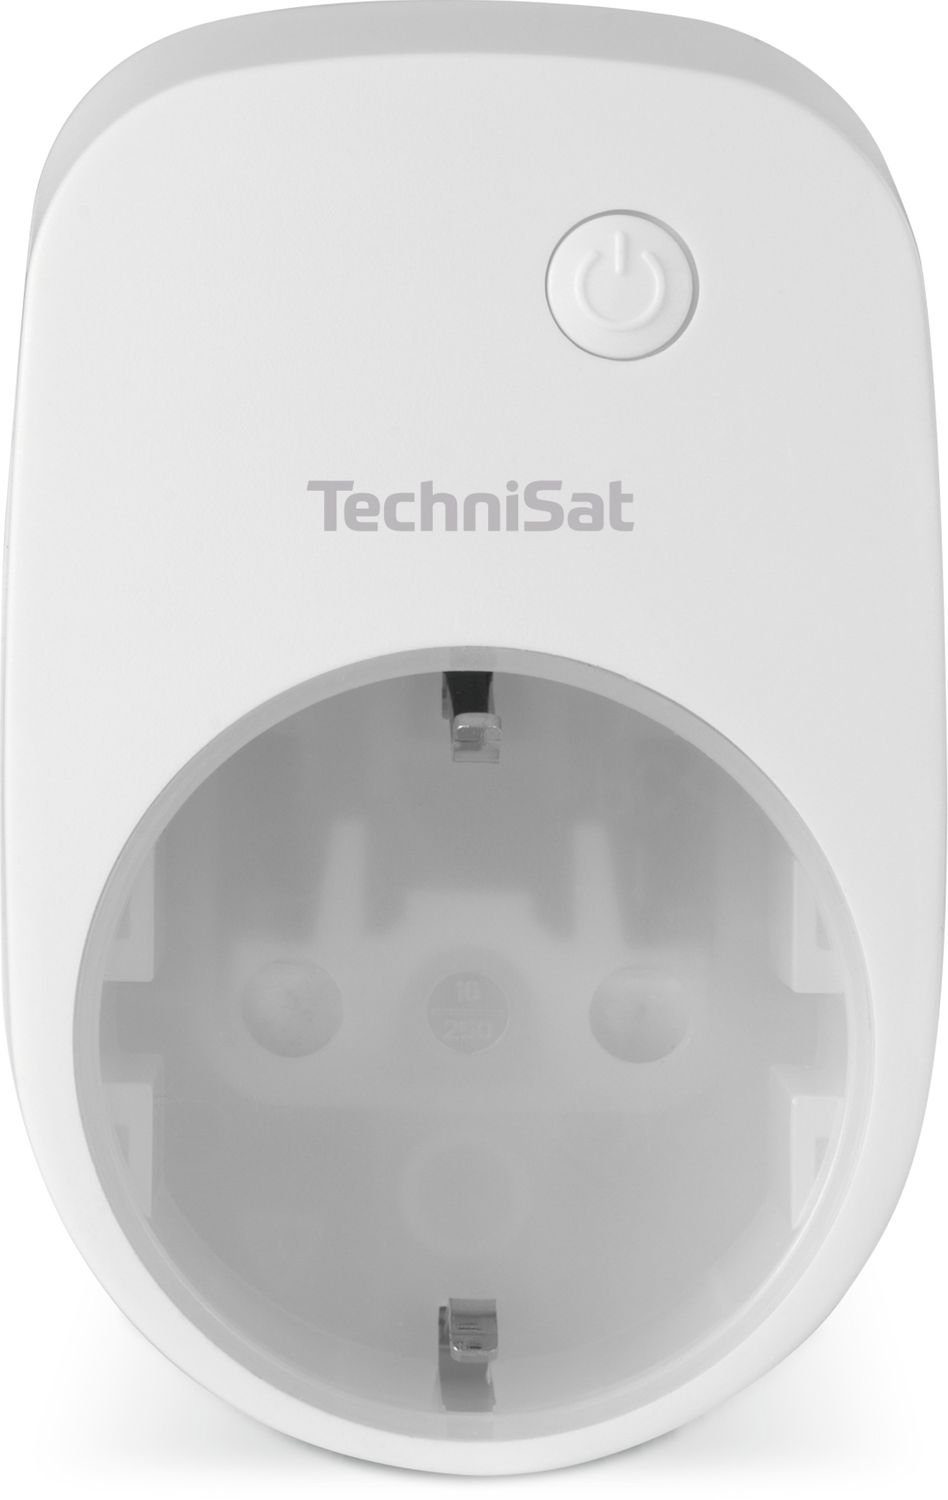 Starter-Set TechniSat Smart-Home-Aufrüstpaket "Energie" Smart-Home